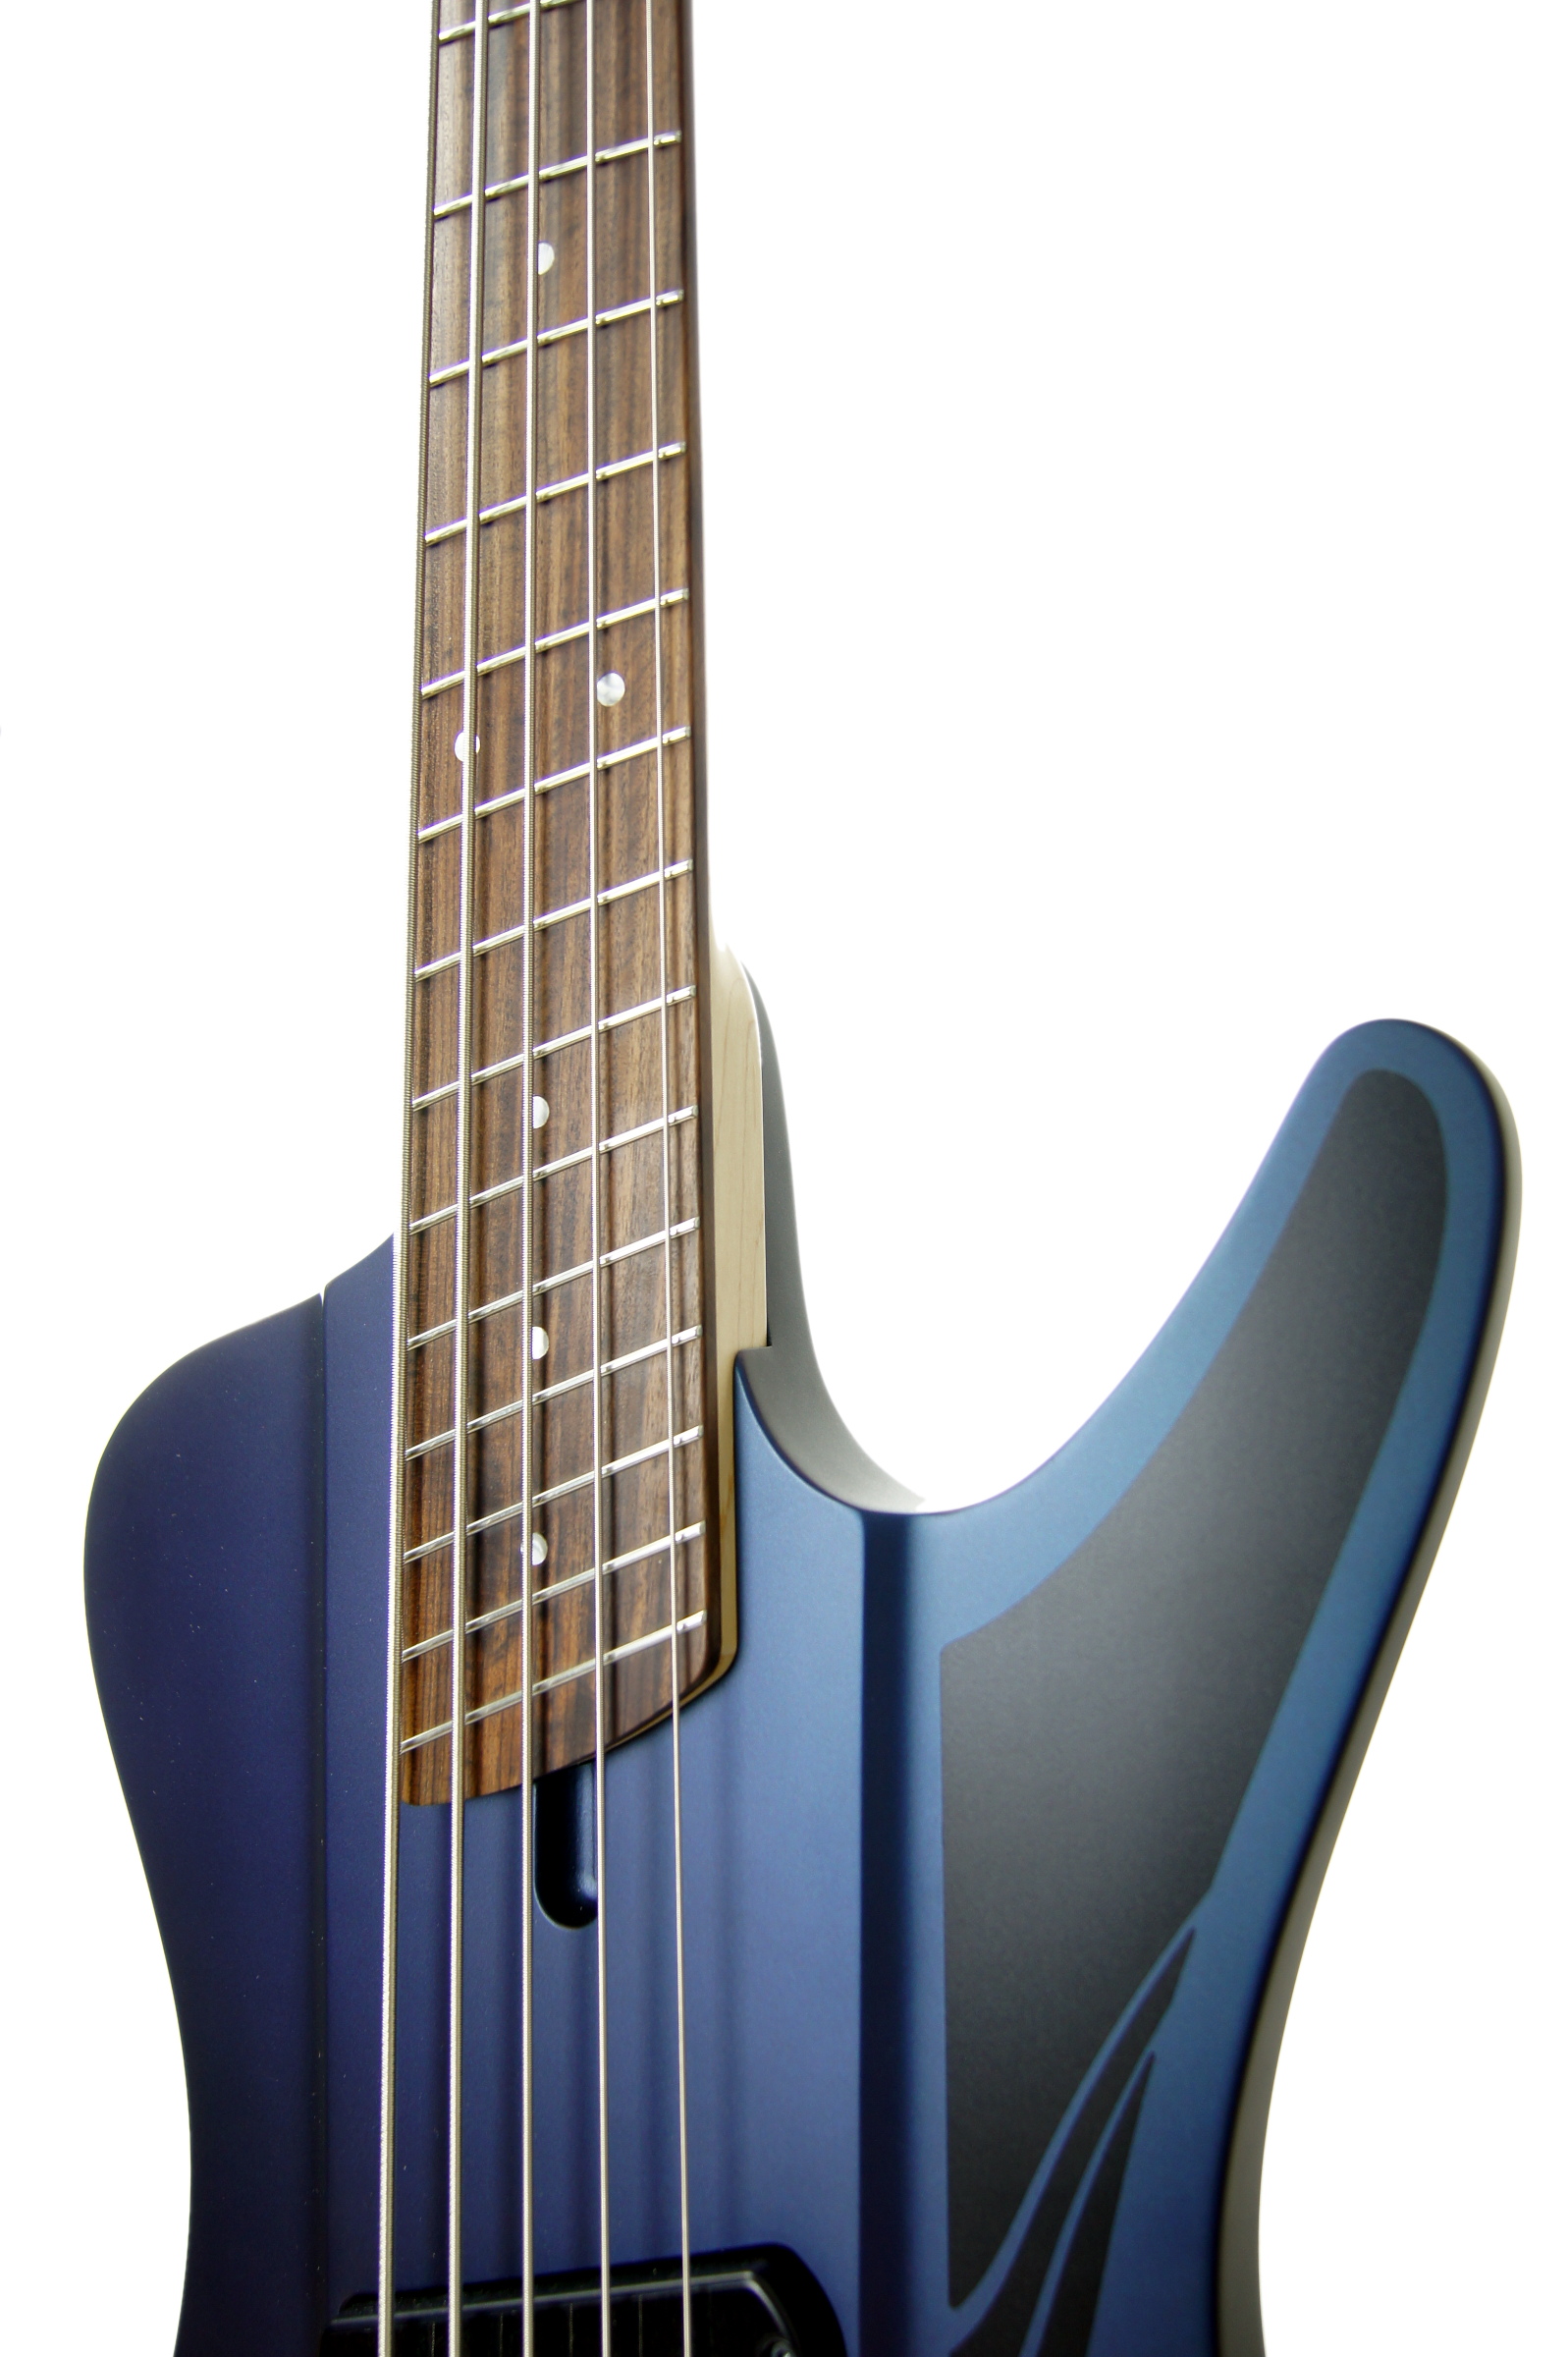 Dingwall D-Roc Standard 5-String, Blue to Purple Colorshift